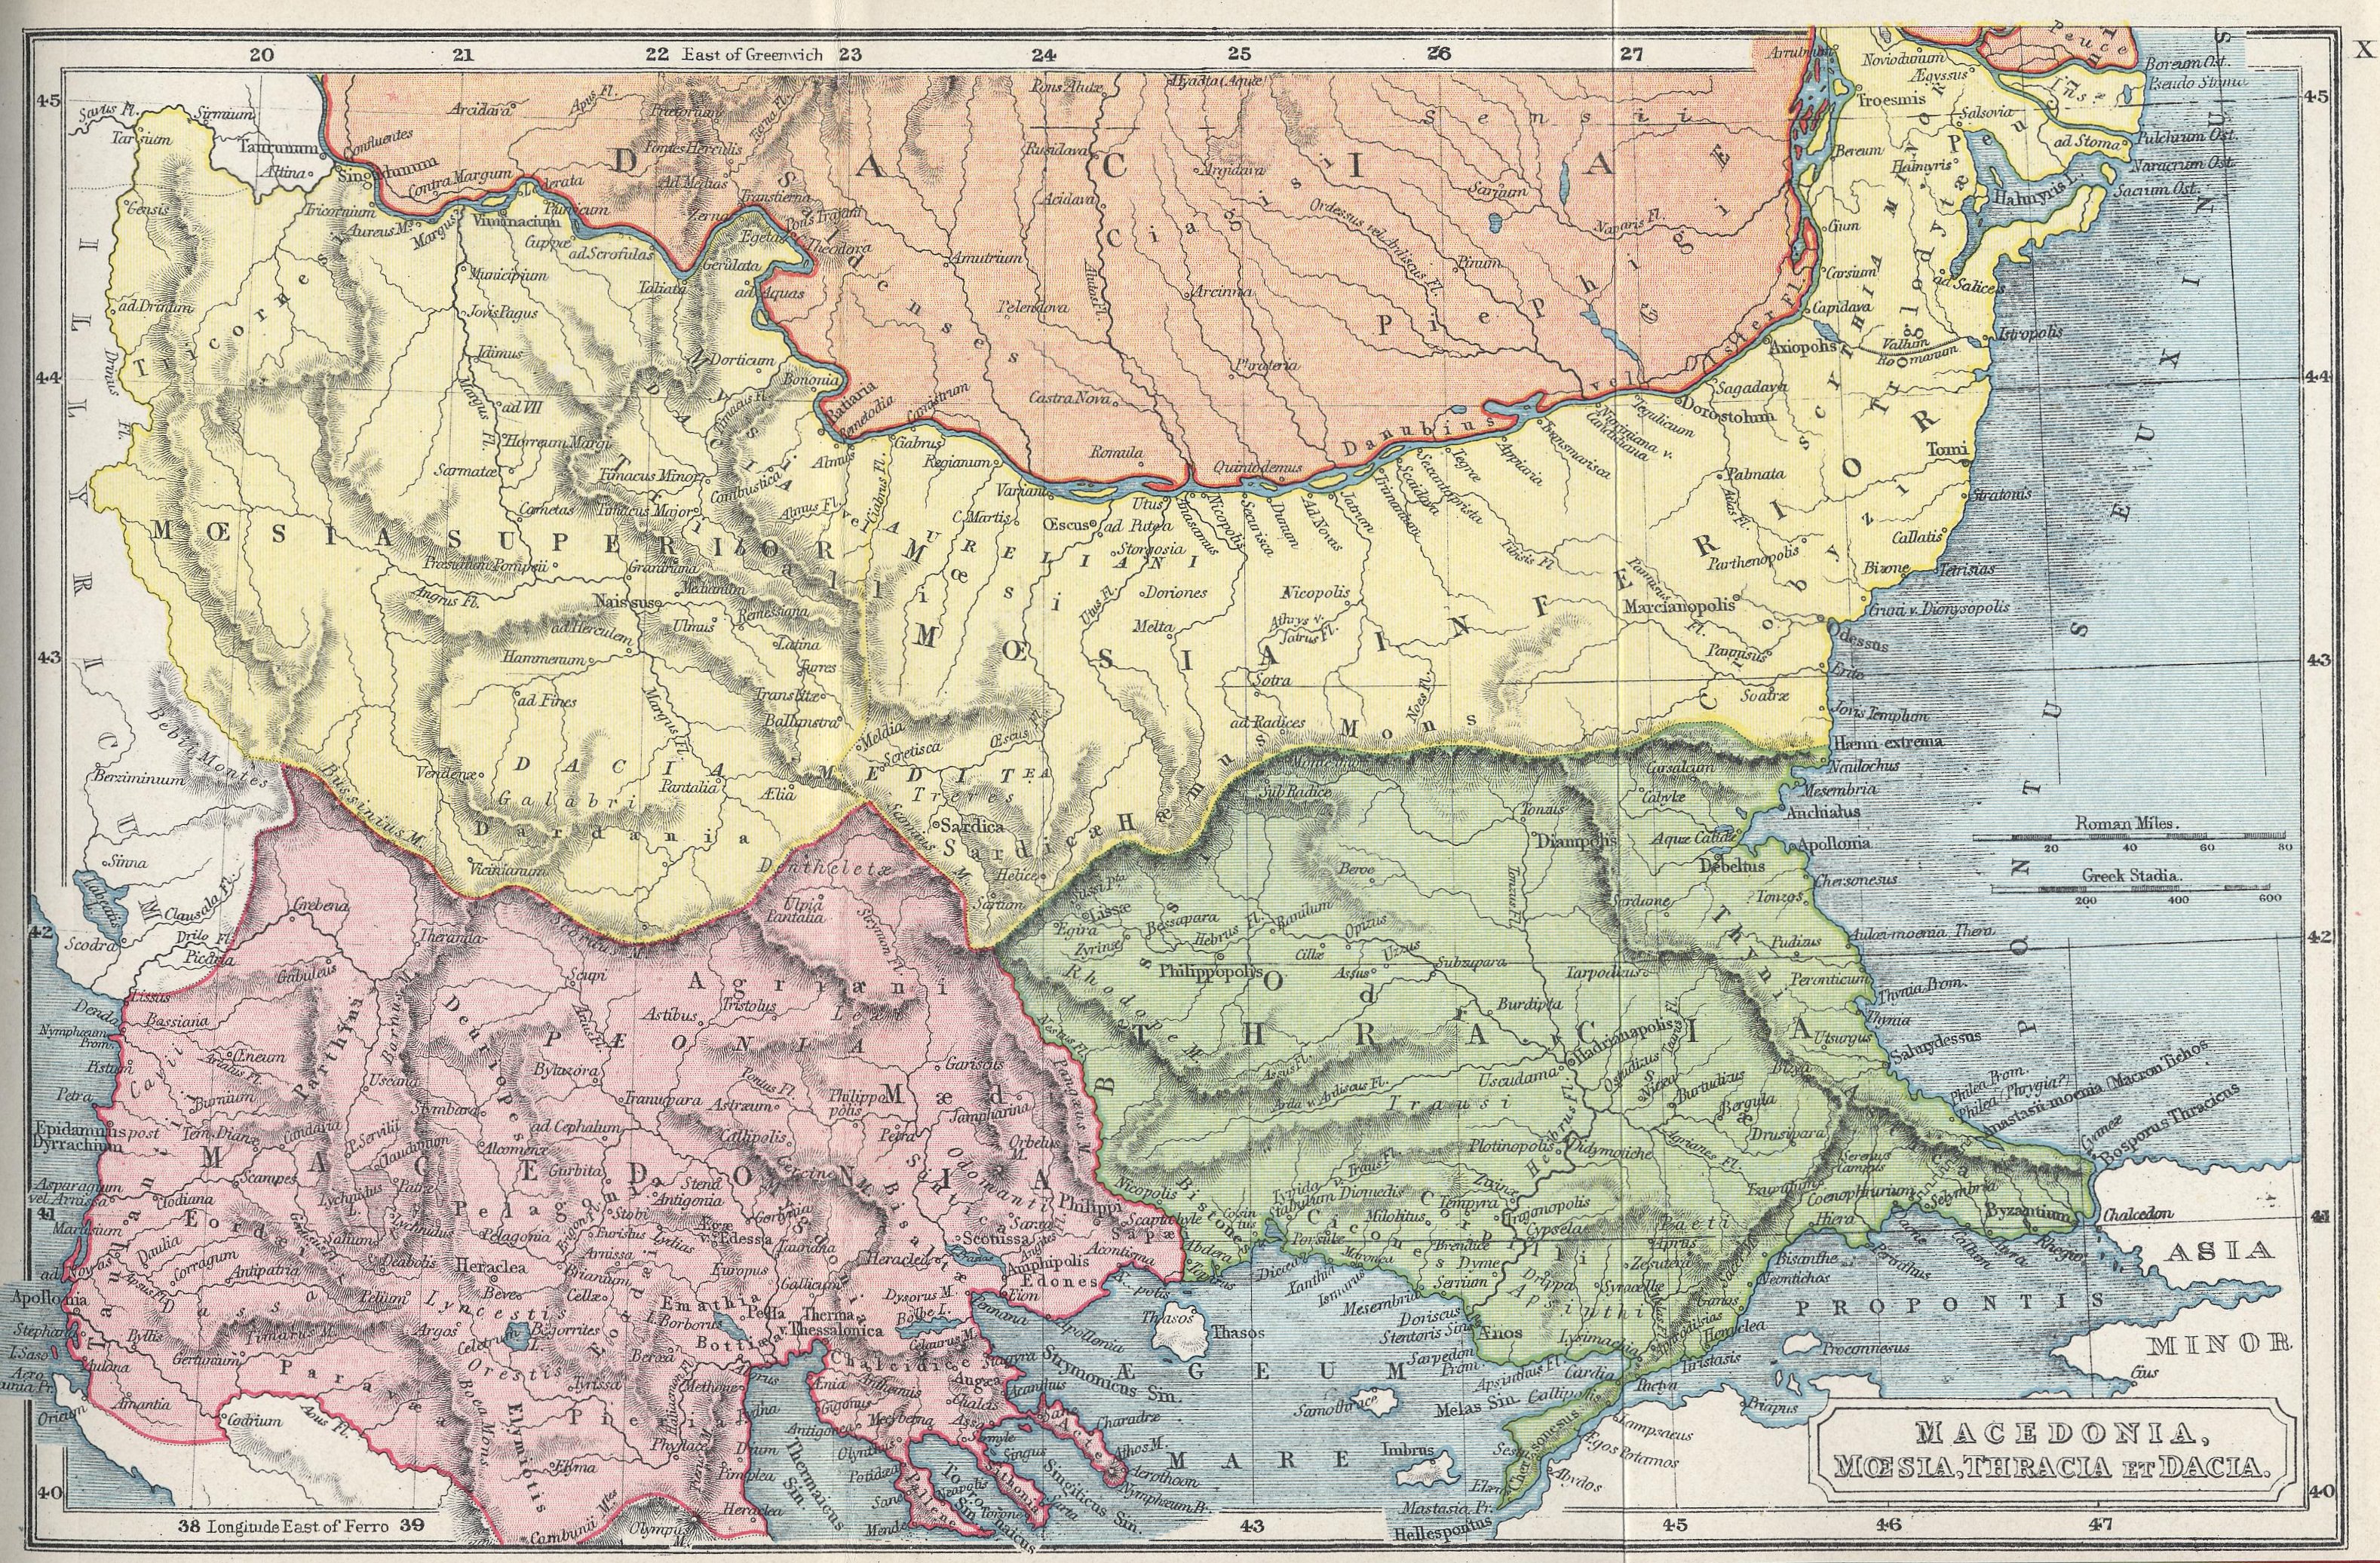 Map of Eastern Balkans70 BC - AD 180